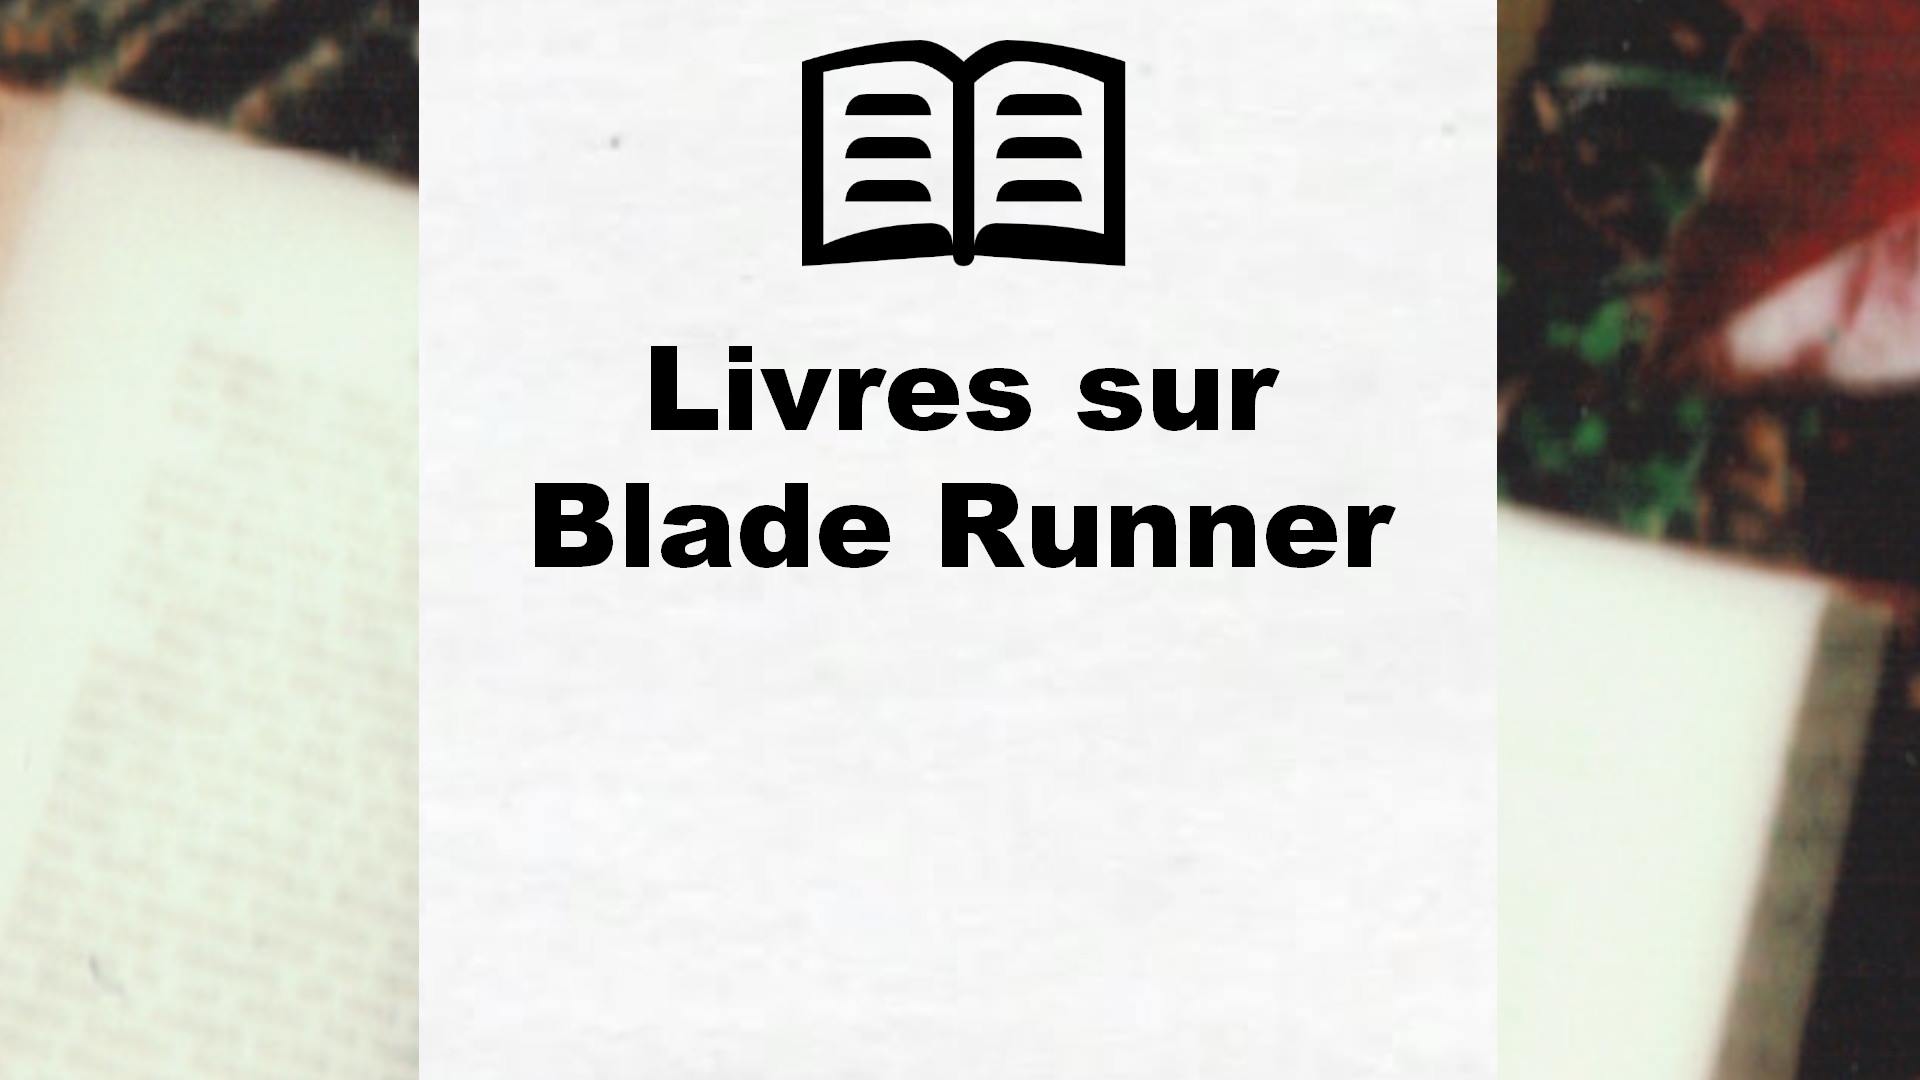 Livres sur Blade Runner